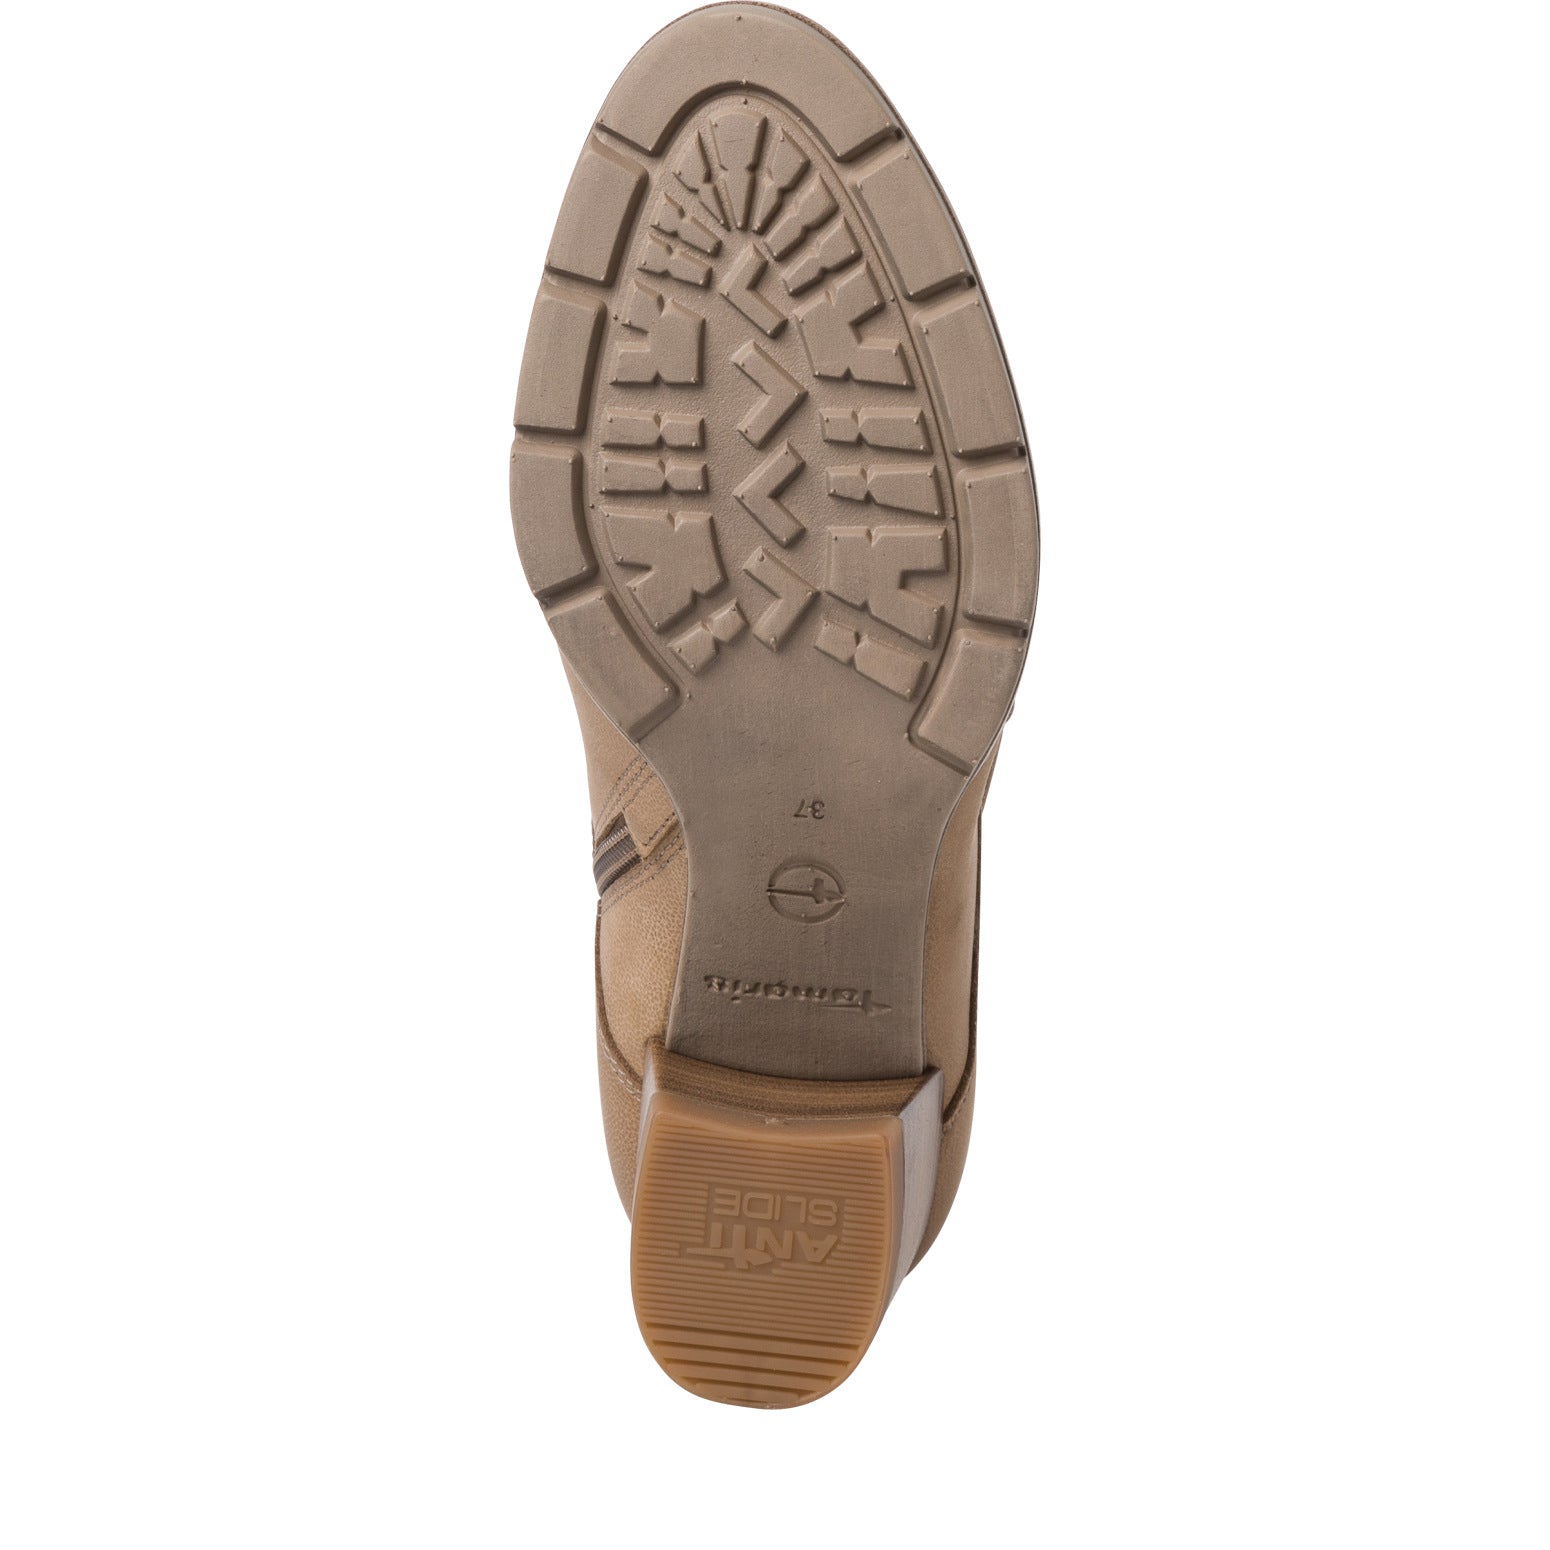 Tamaris 25108-29 474 Ladies Desert Nubuck Zip & Lace Ankle Boots